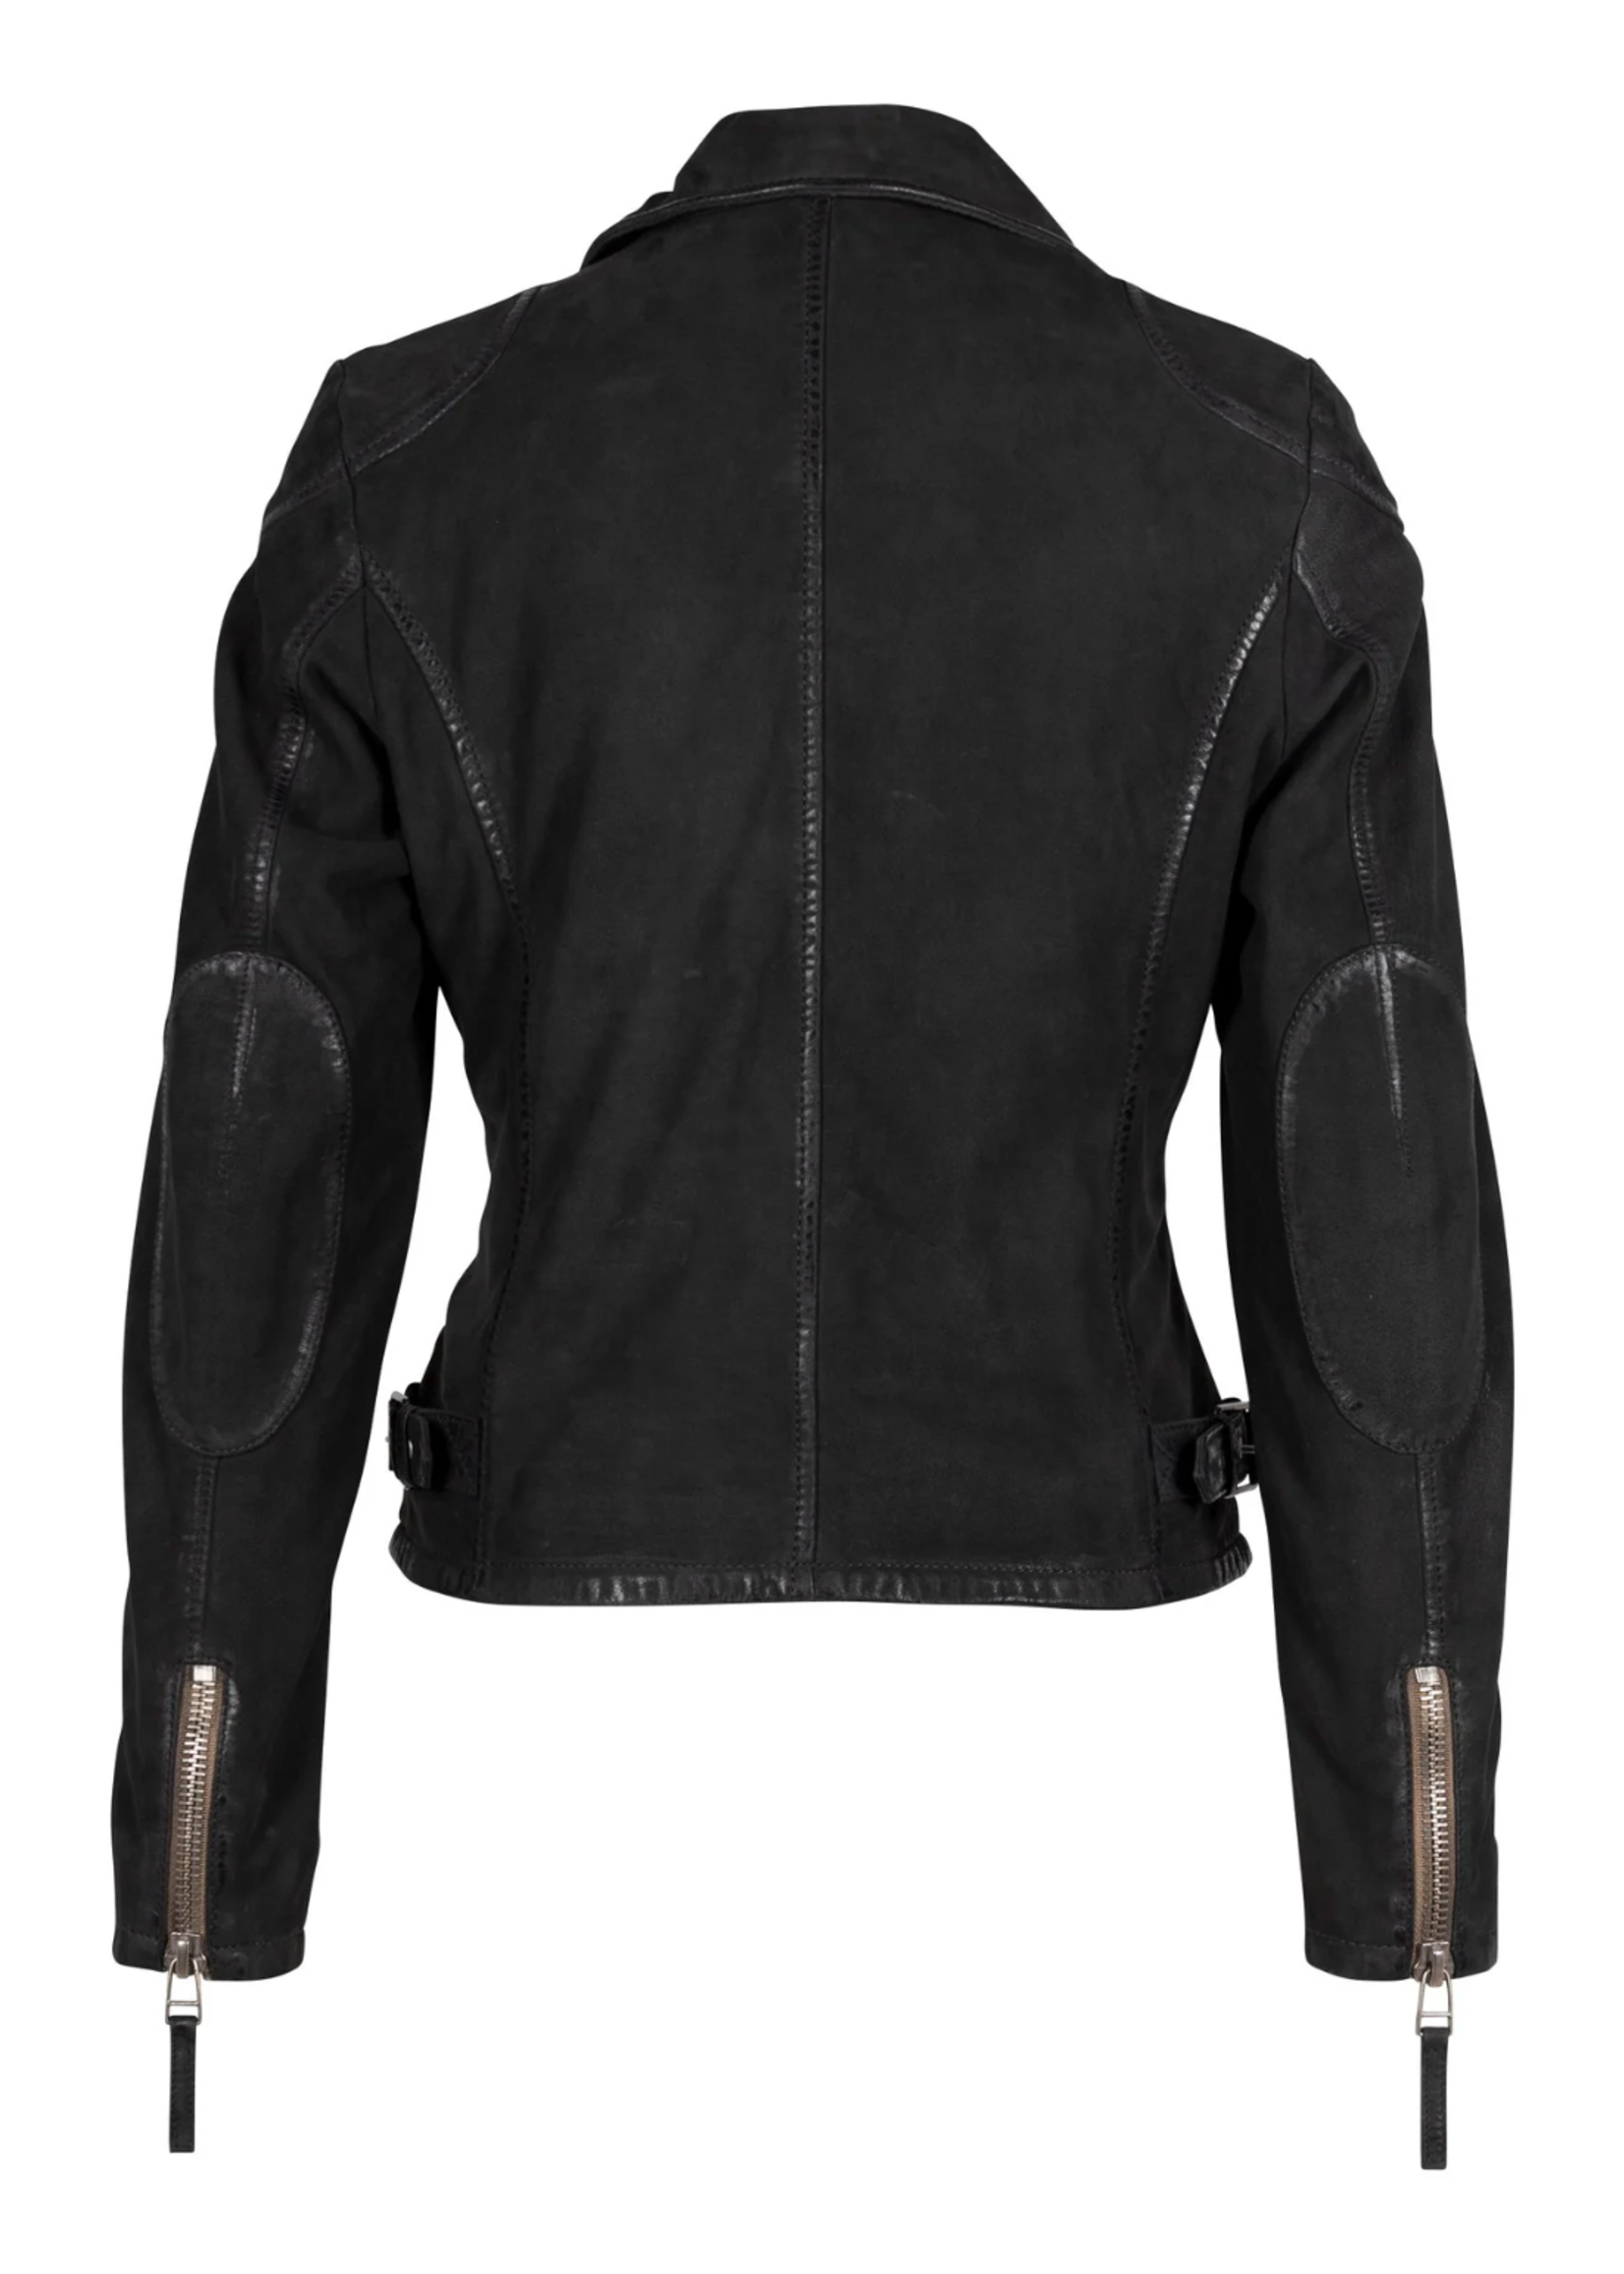 Mauritius Karyn Leather Jacket